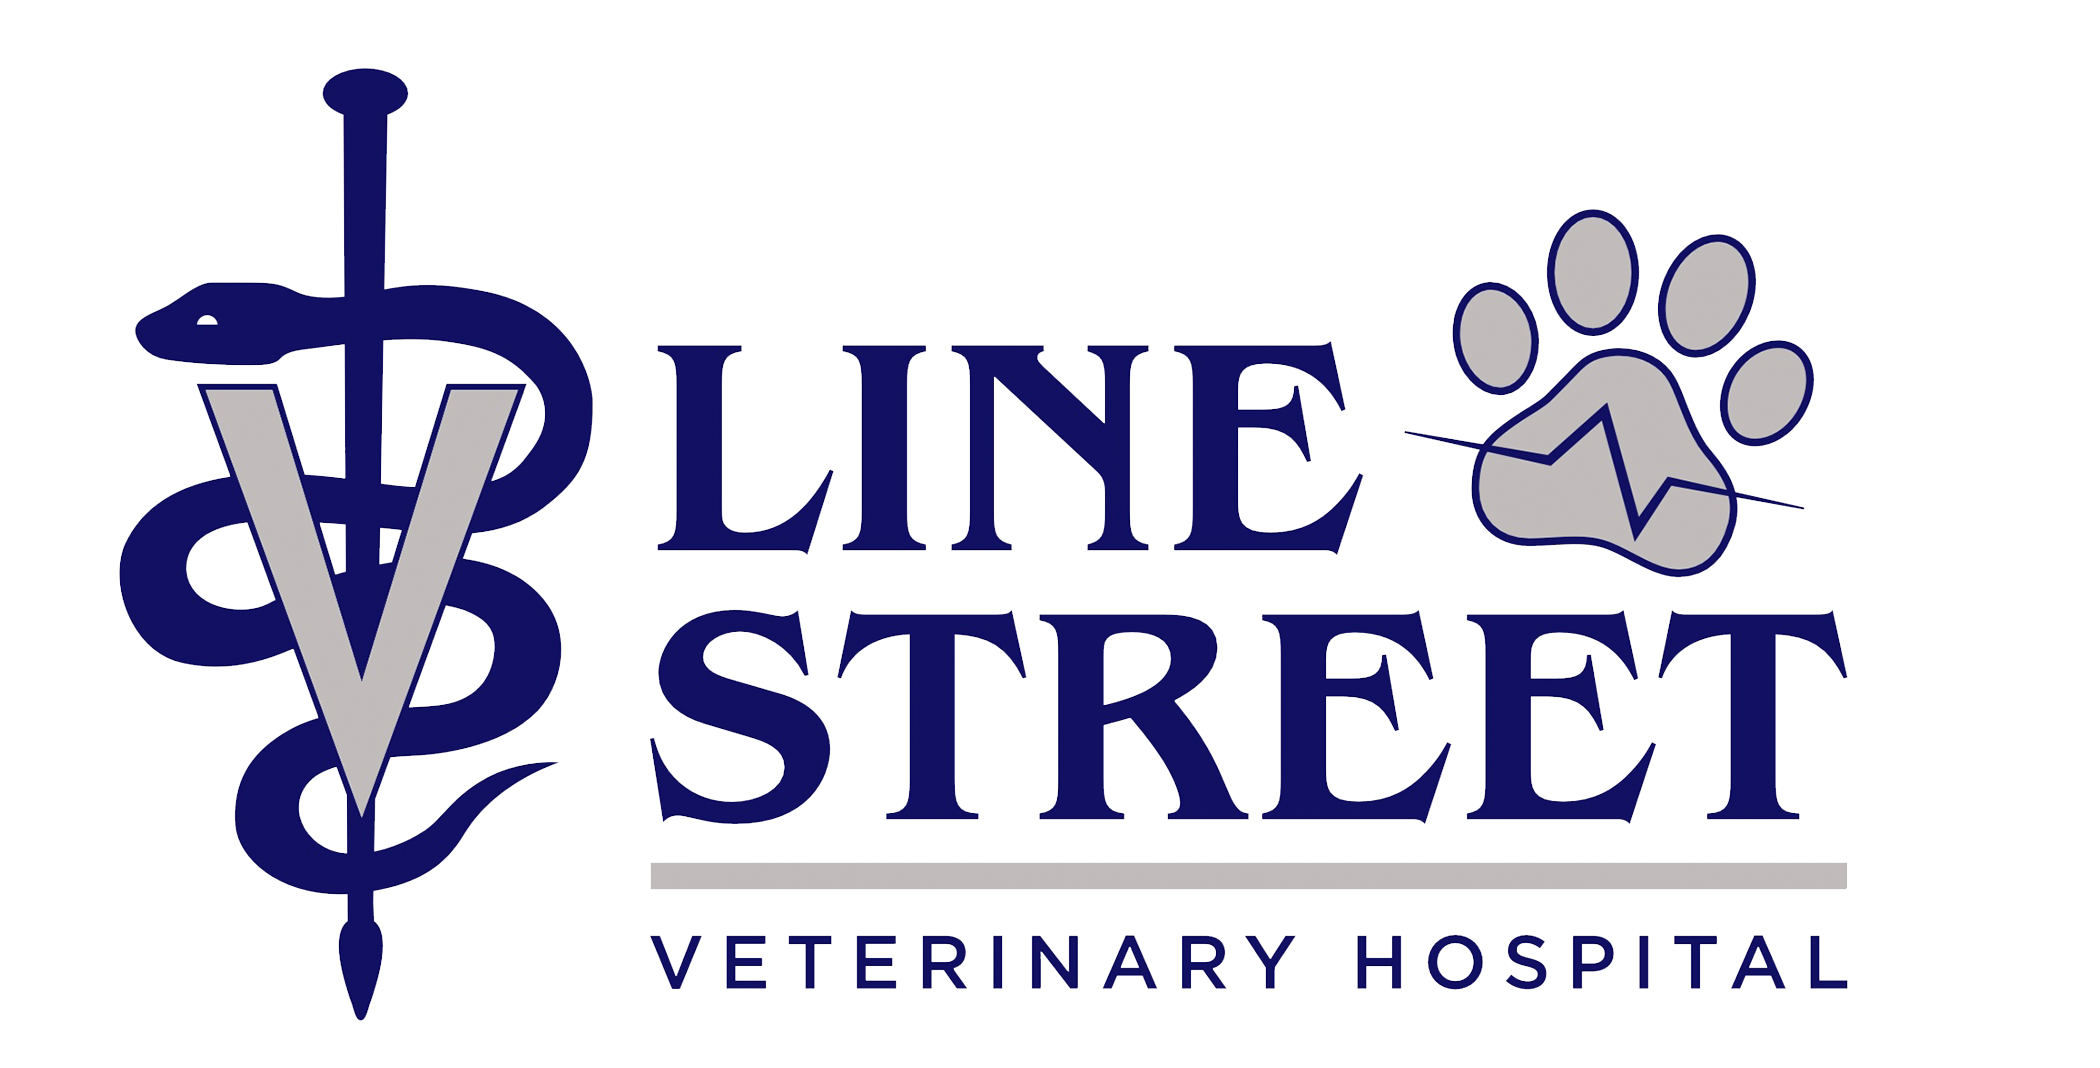 Line Street Veterinary Hospital